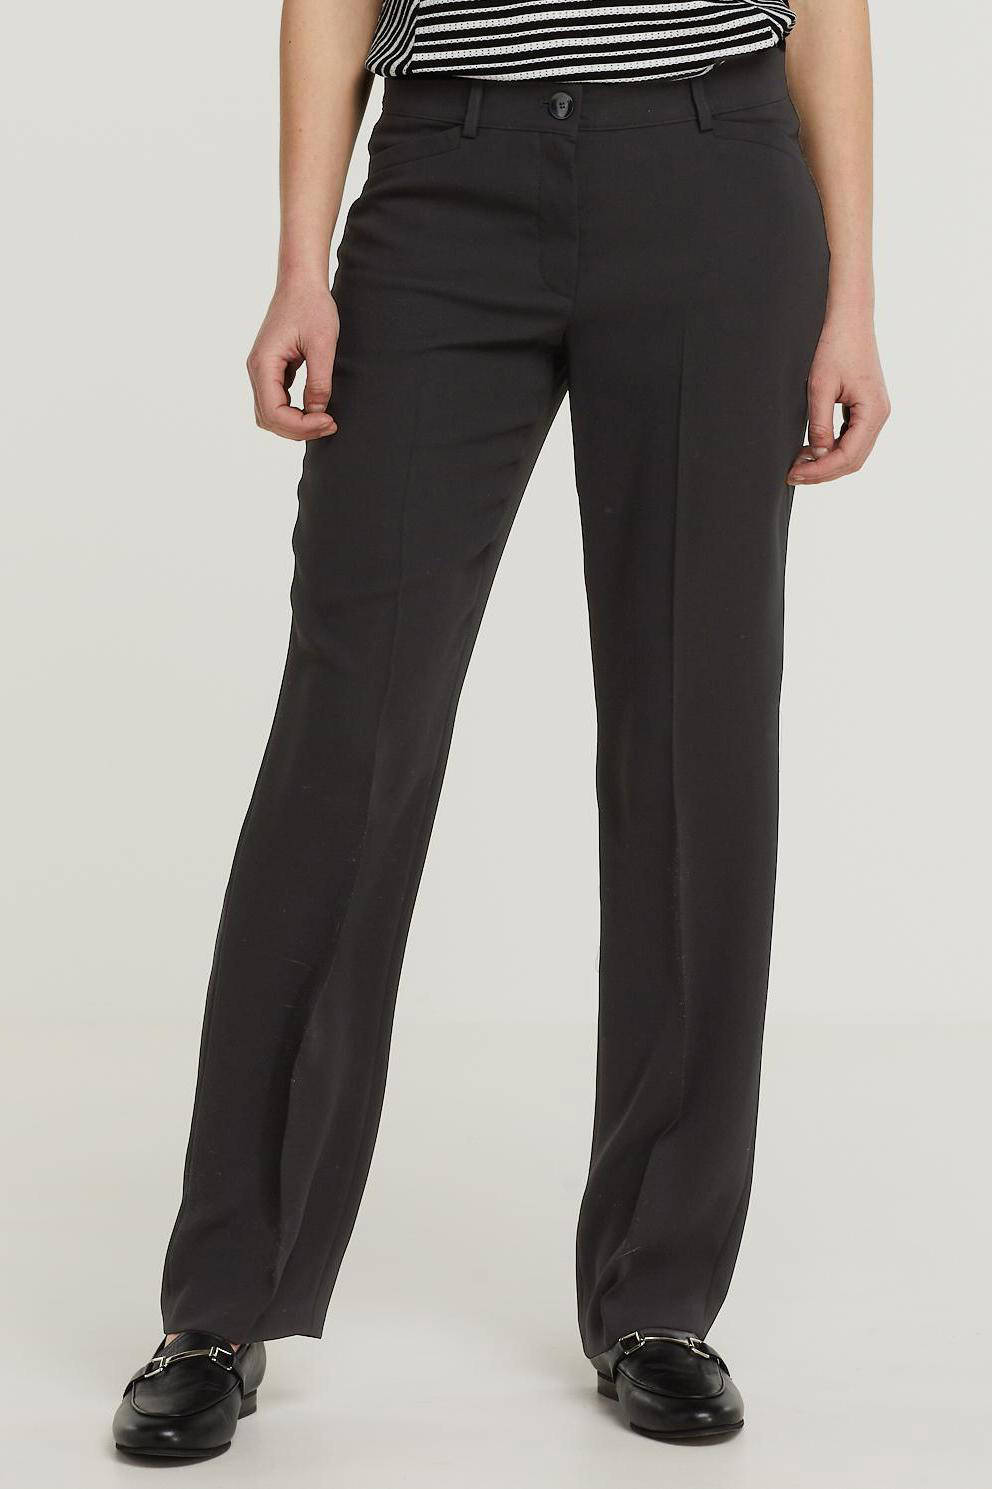 Lawrence Grey Pantalon zwart zakelijke stijl Mode Pakken Pantalons 